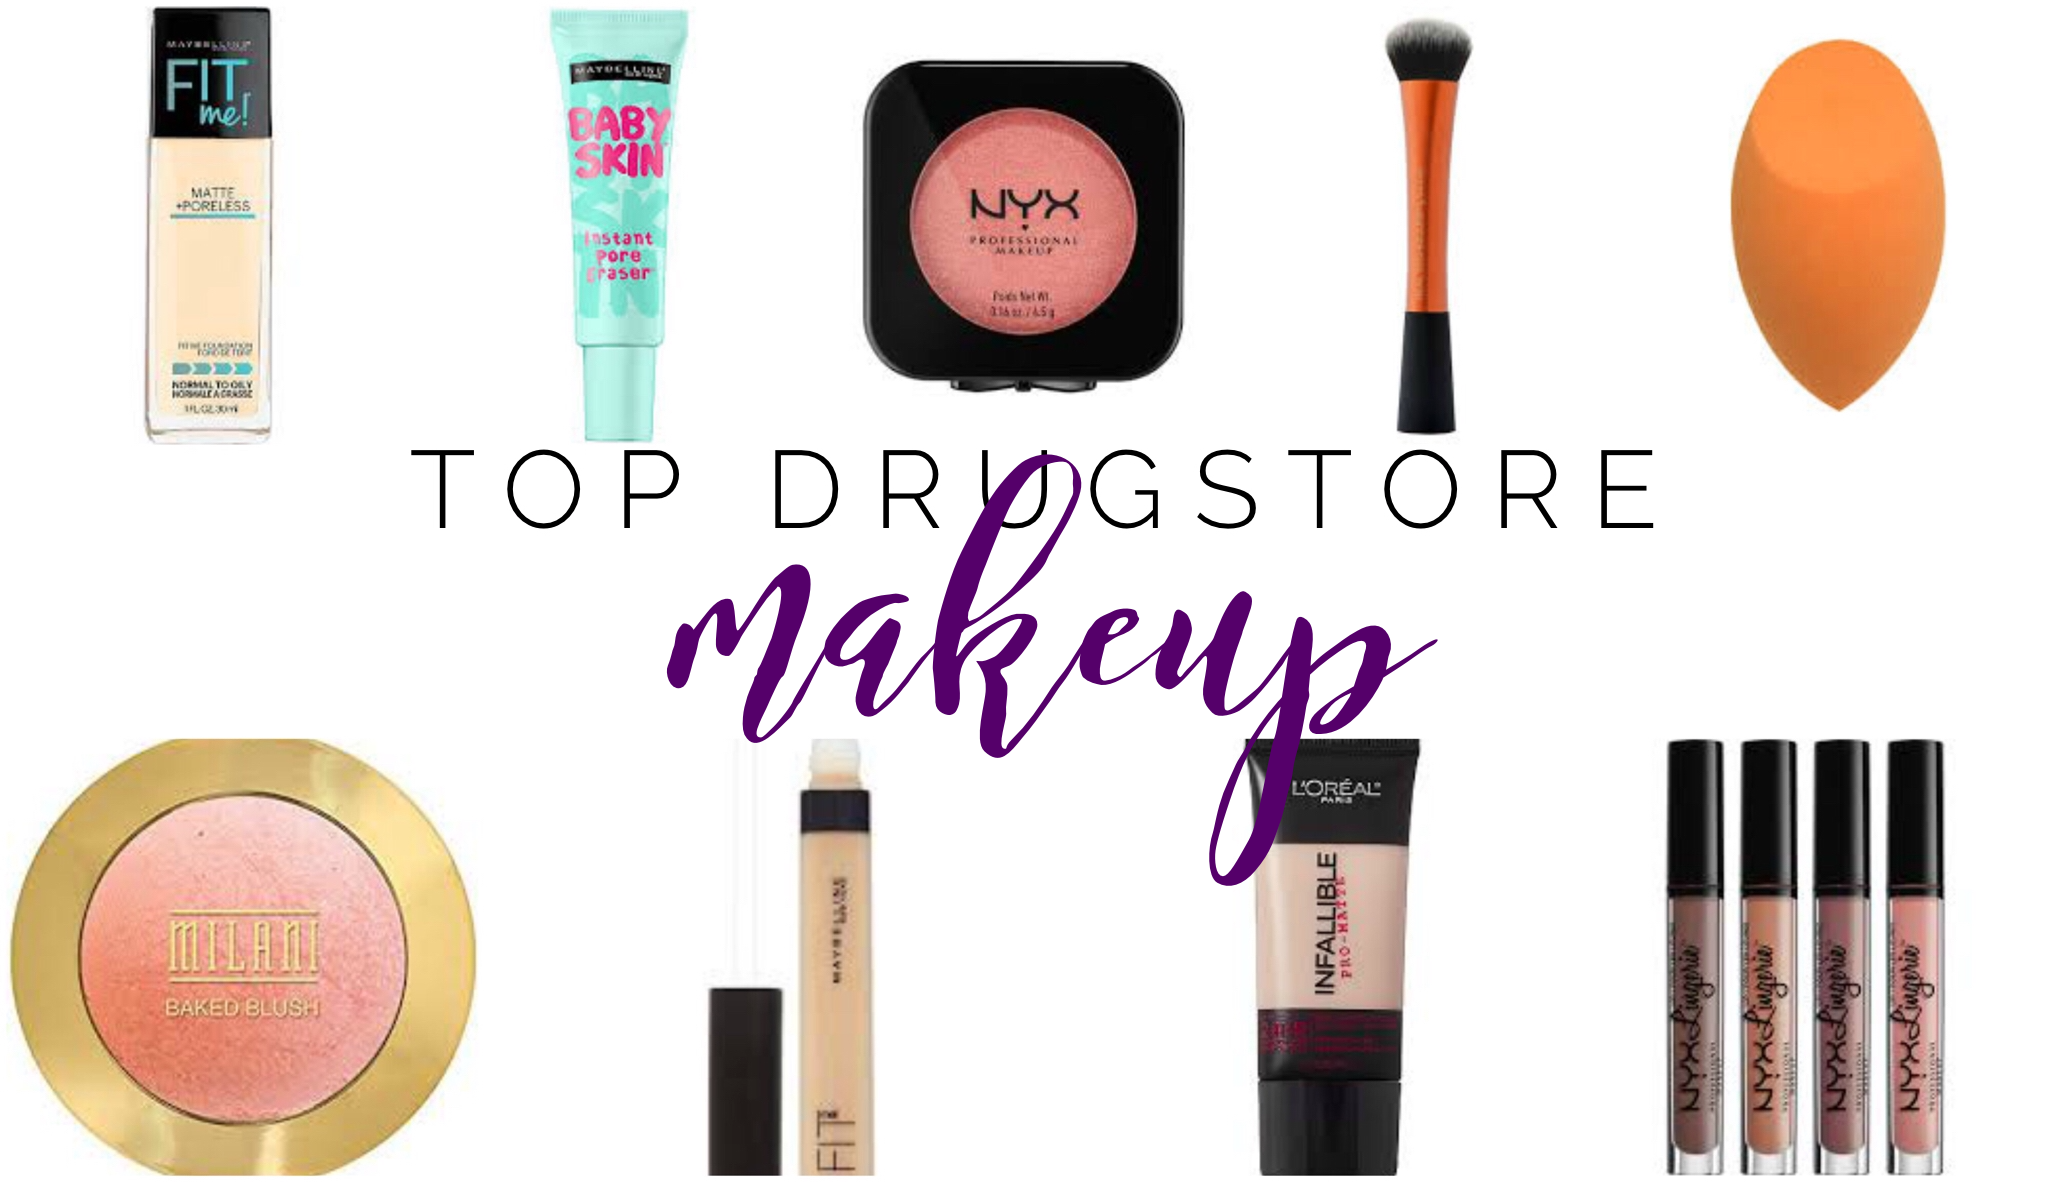 Top Drugstore Make-up